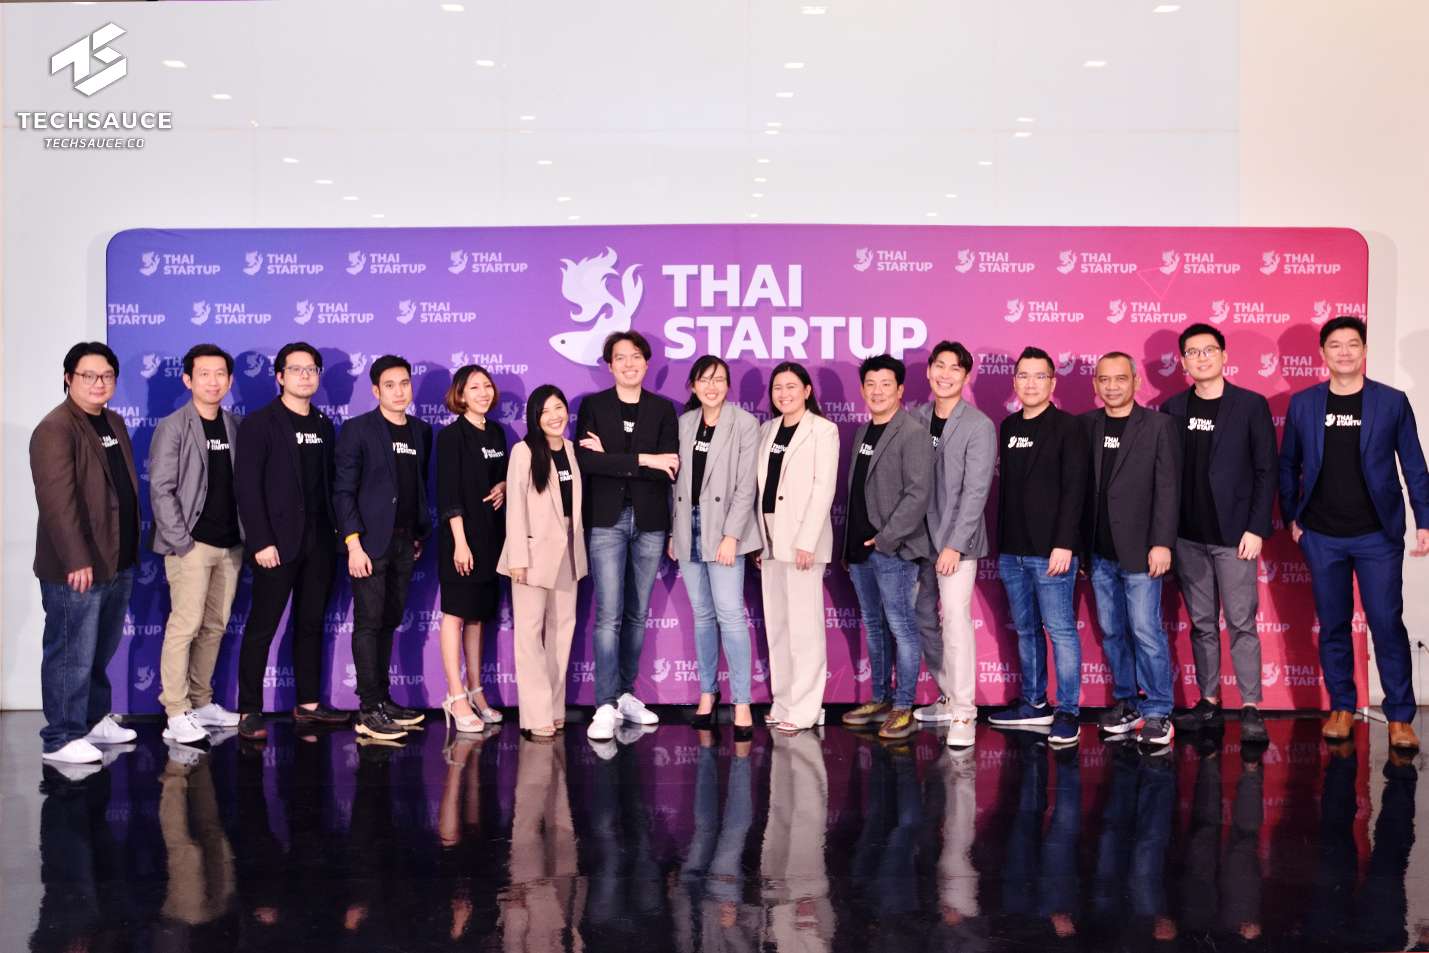 THAI STARTUP โชว์เคส The New Vision จับมือกว่า 40 องค์กร ร่วมติดปีกสตาร์ทอัพไทย